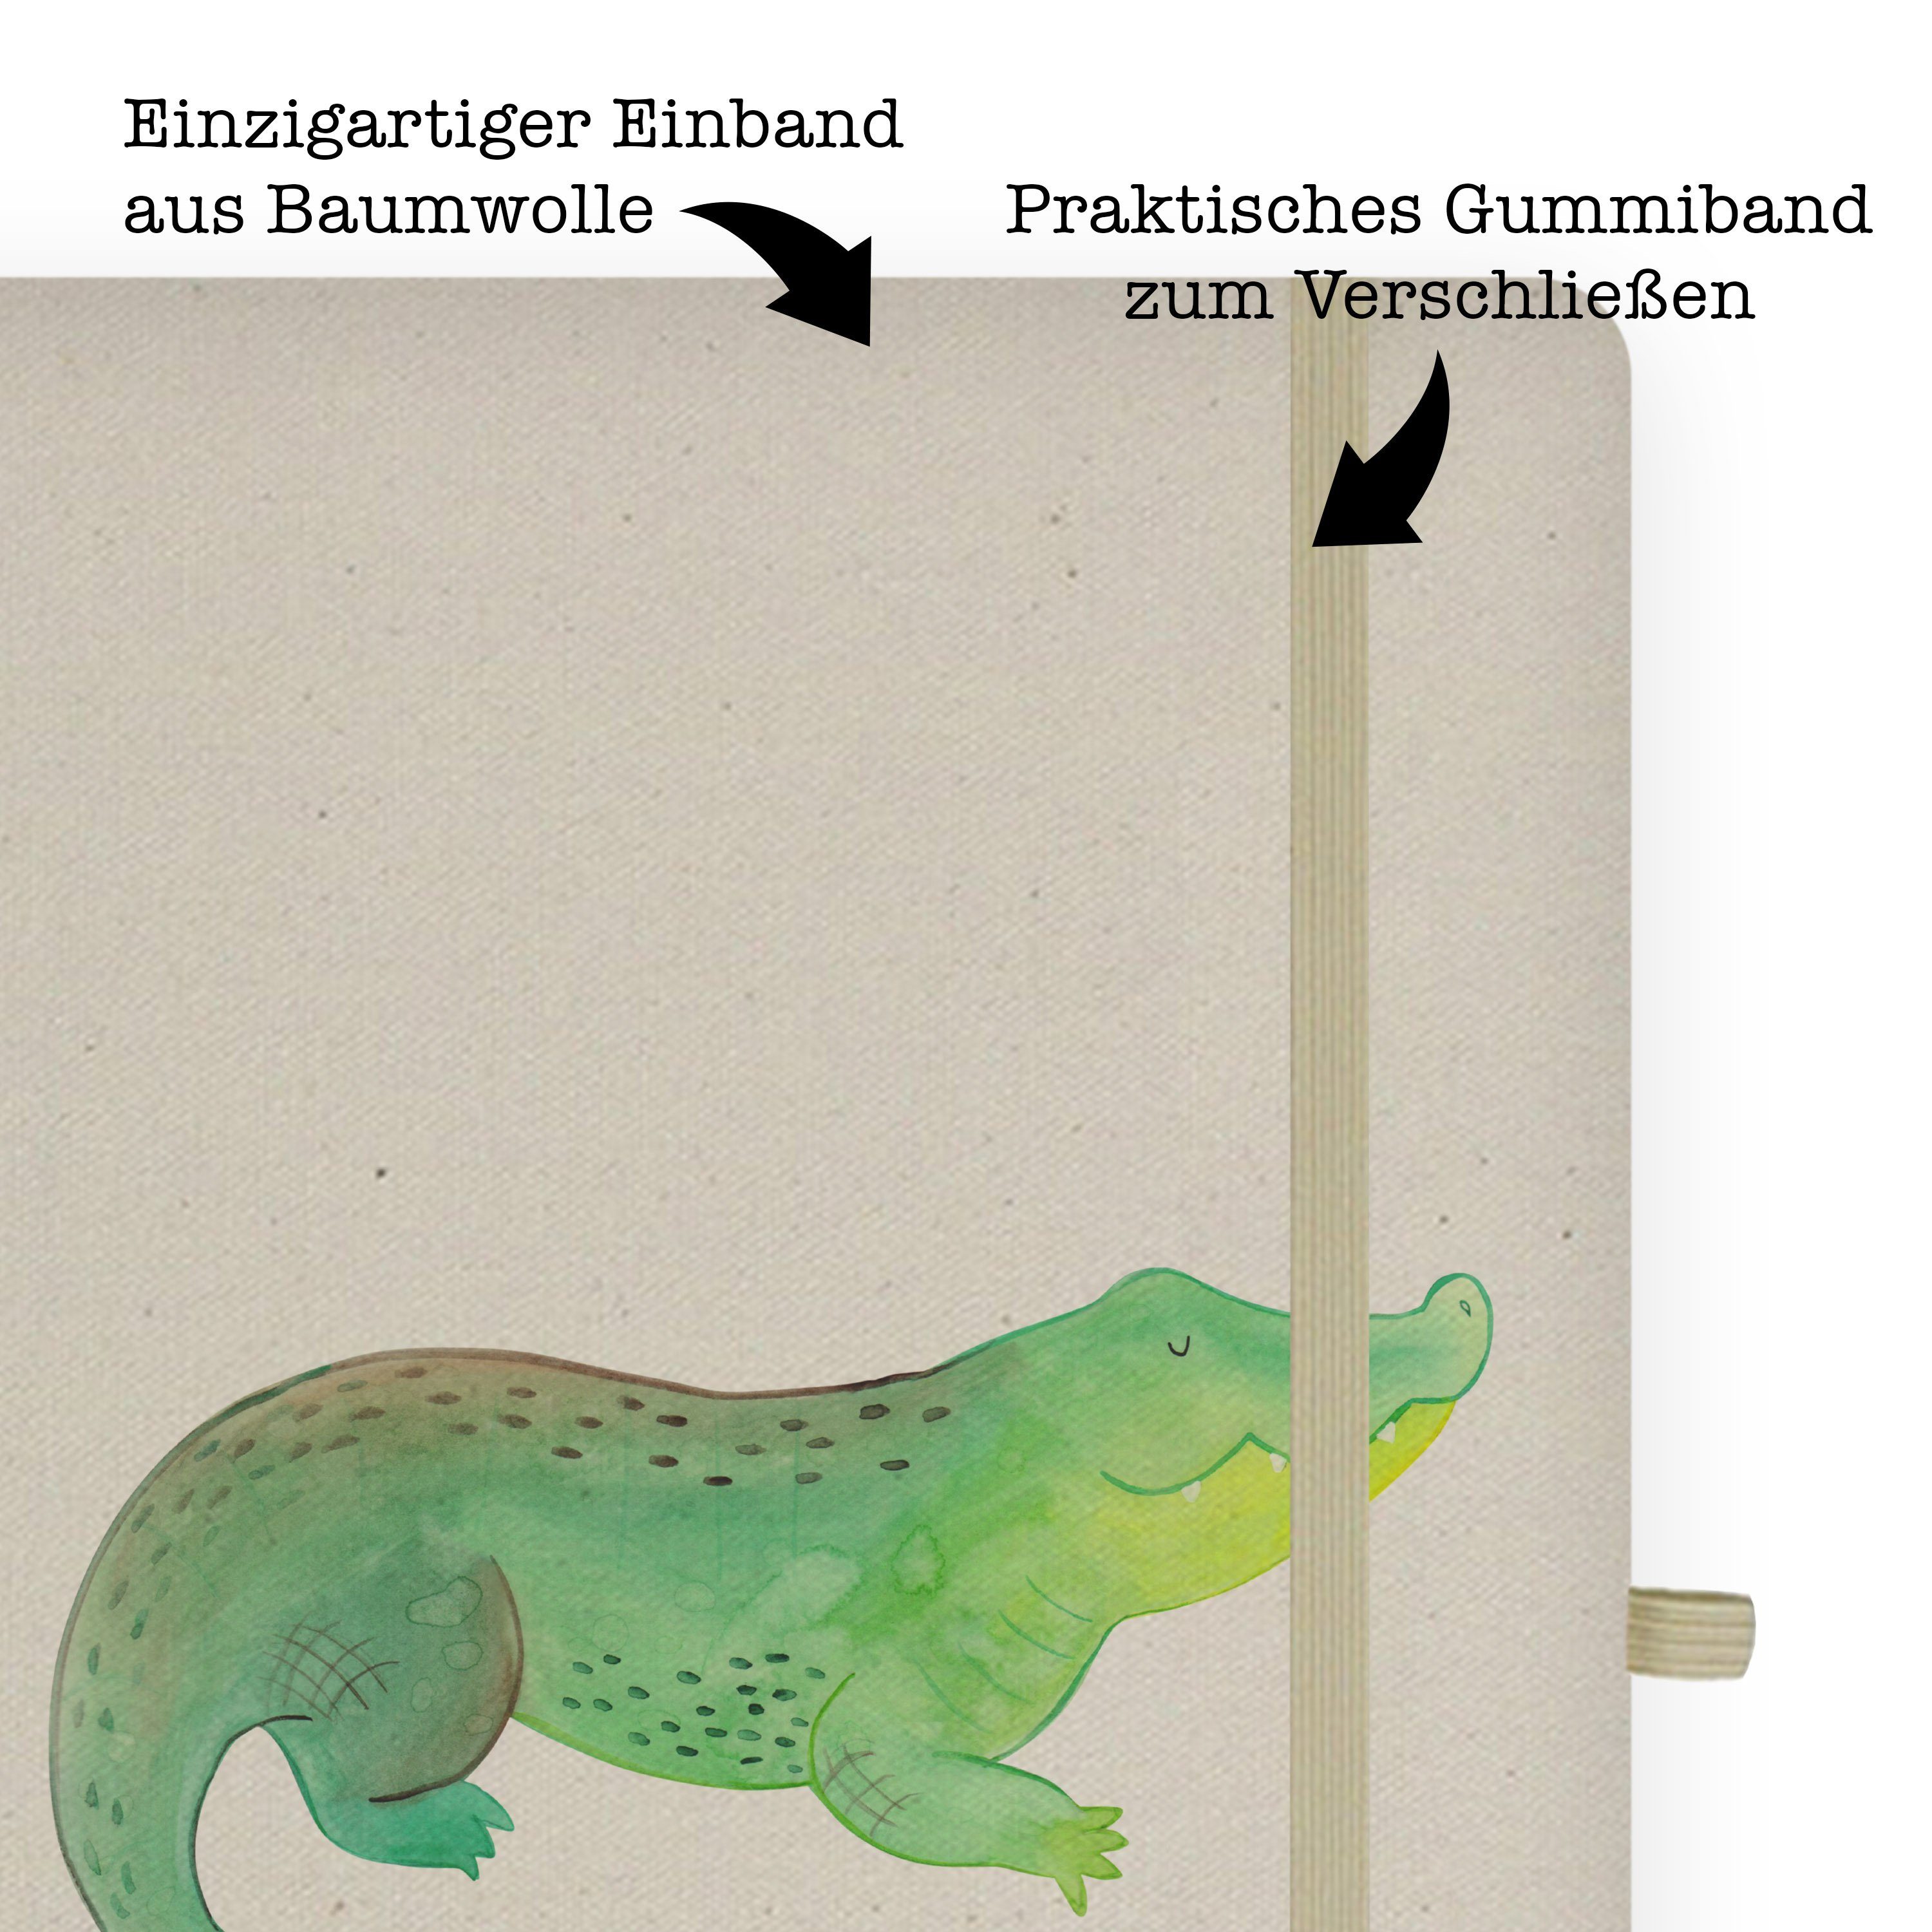 Transparent Notizbuch & Krokodil S Notizen, Mr. Geschenk, Panda & Panda - Mr. Mrs. Eintragebuch, - Mrs. Freundin,